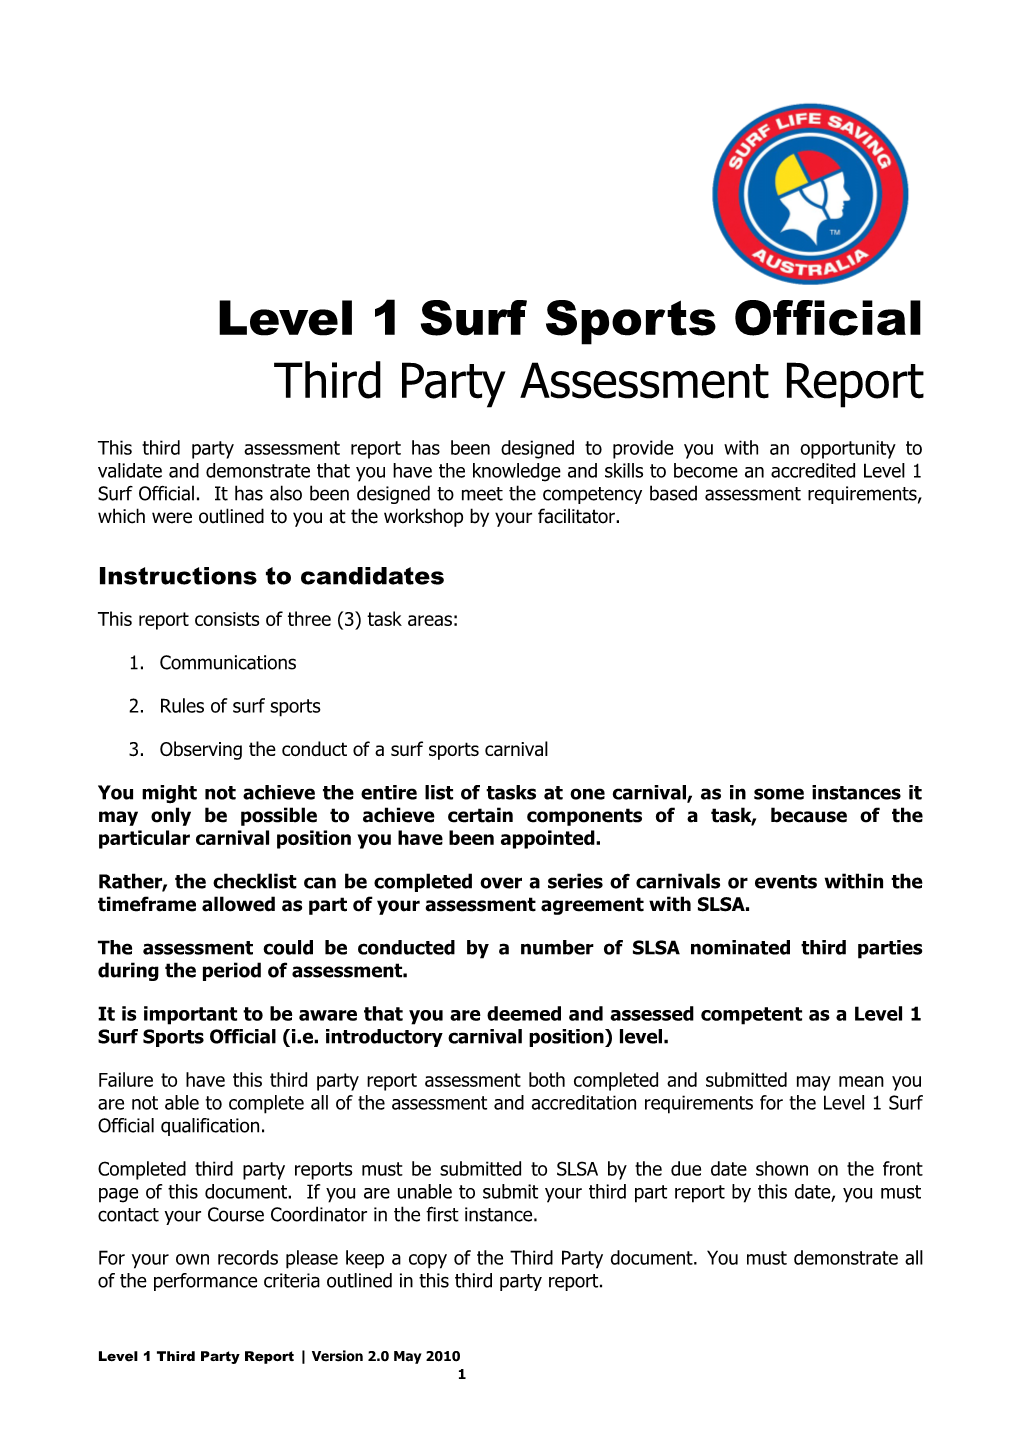 Level 1 Surf Officials